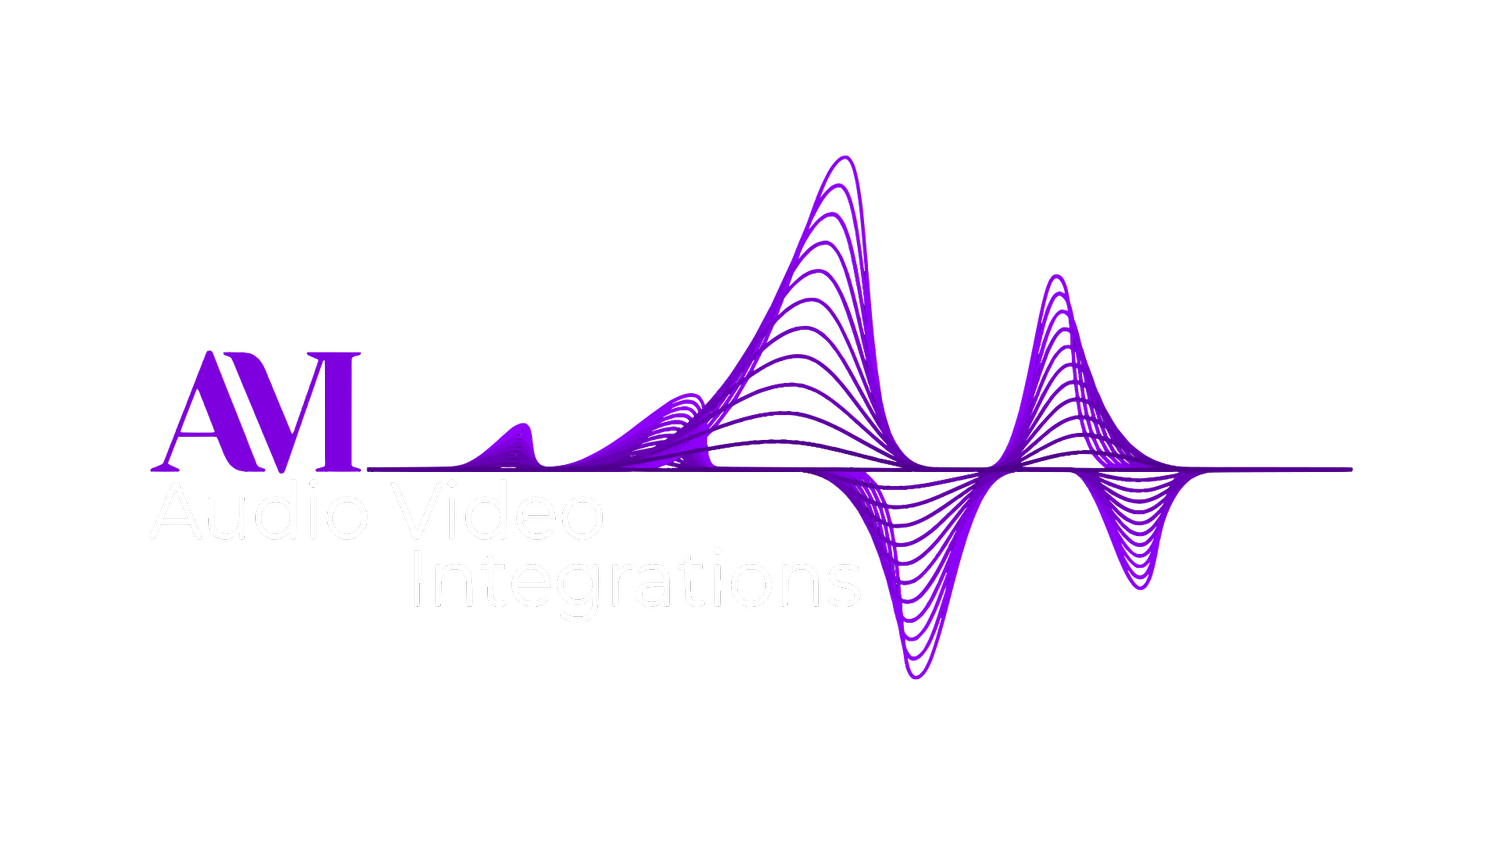 Audio Video Integrations